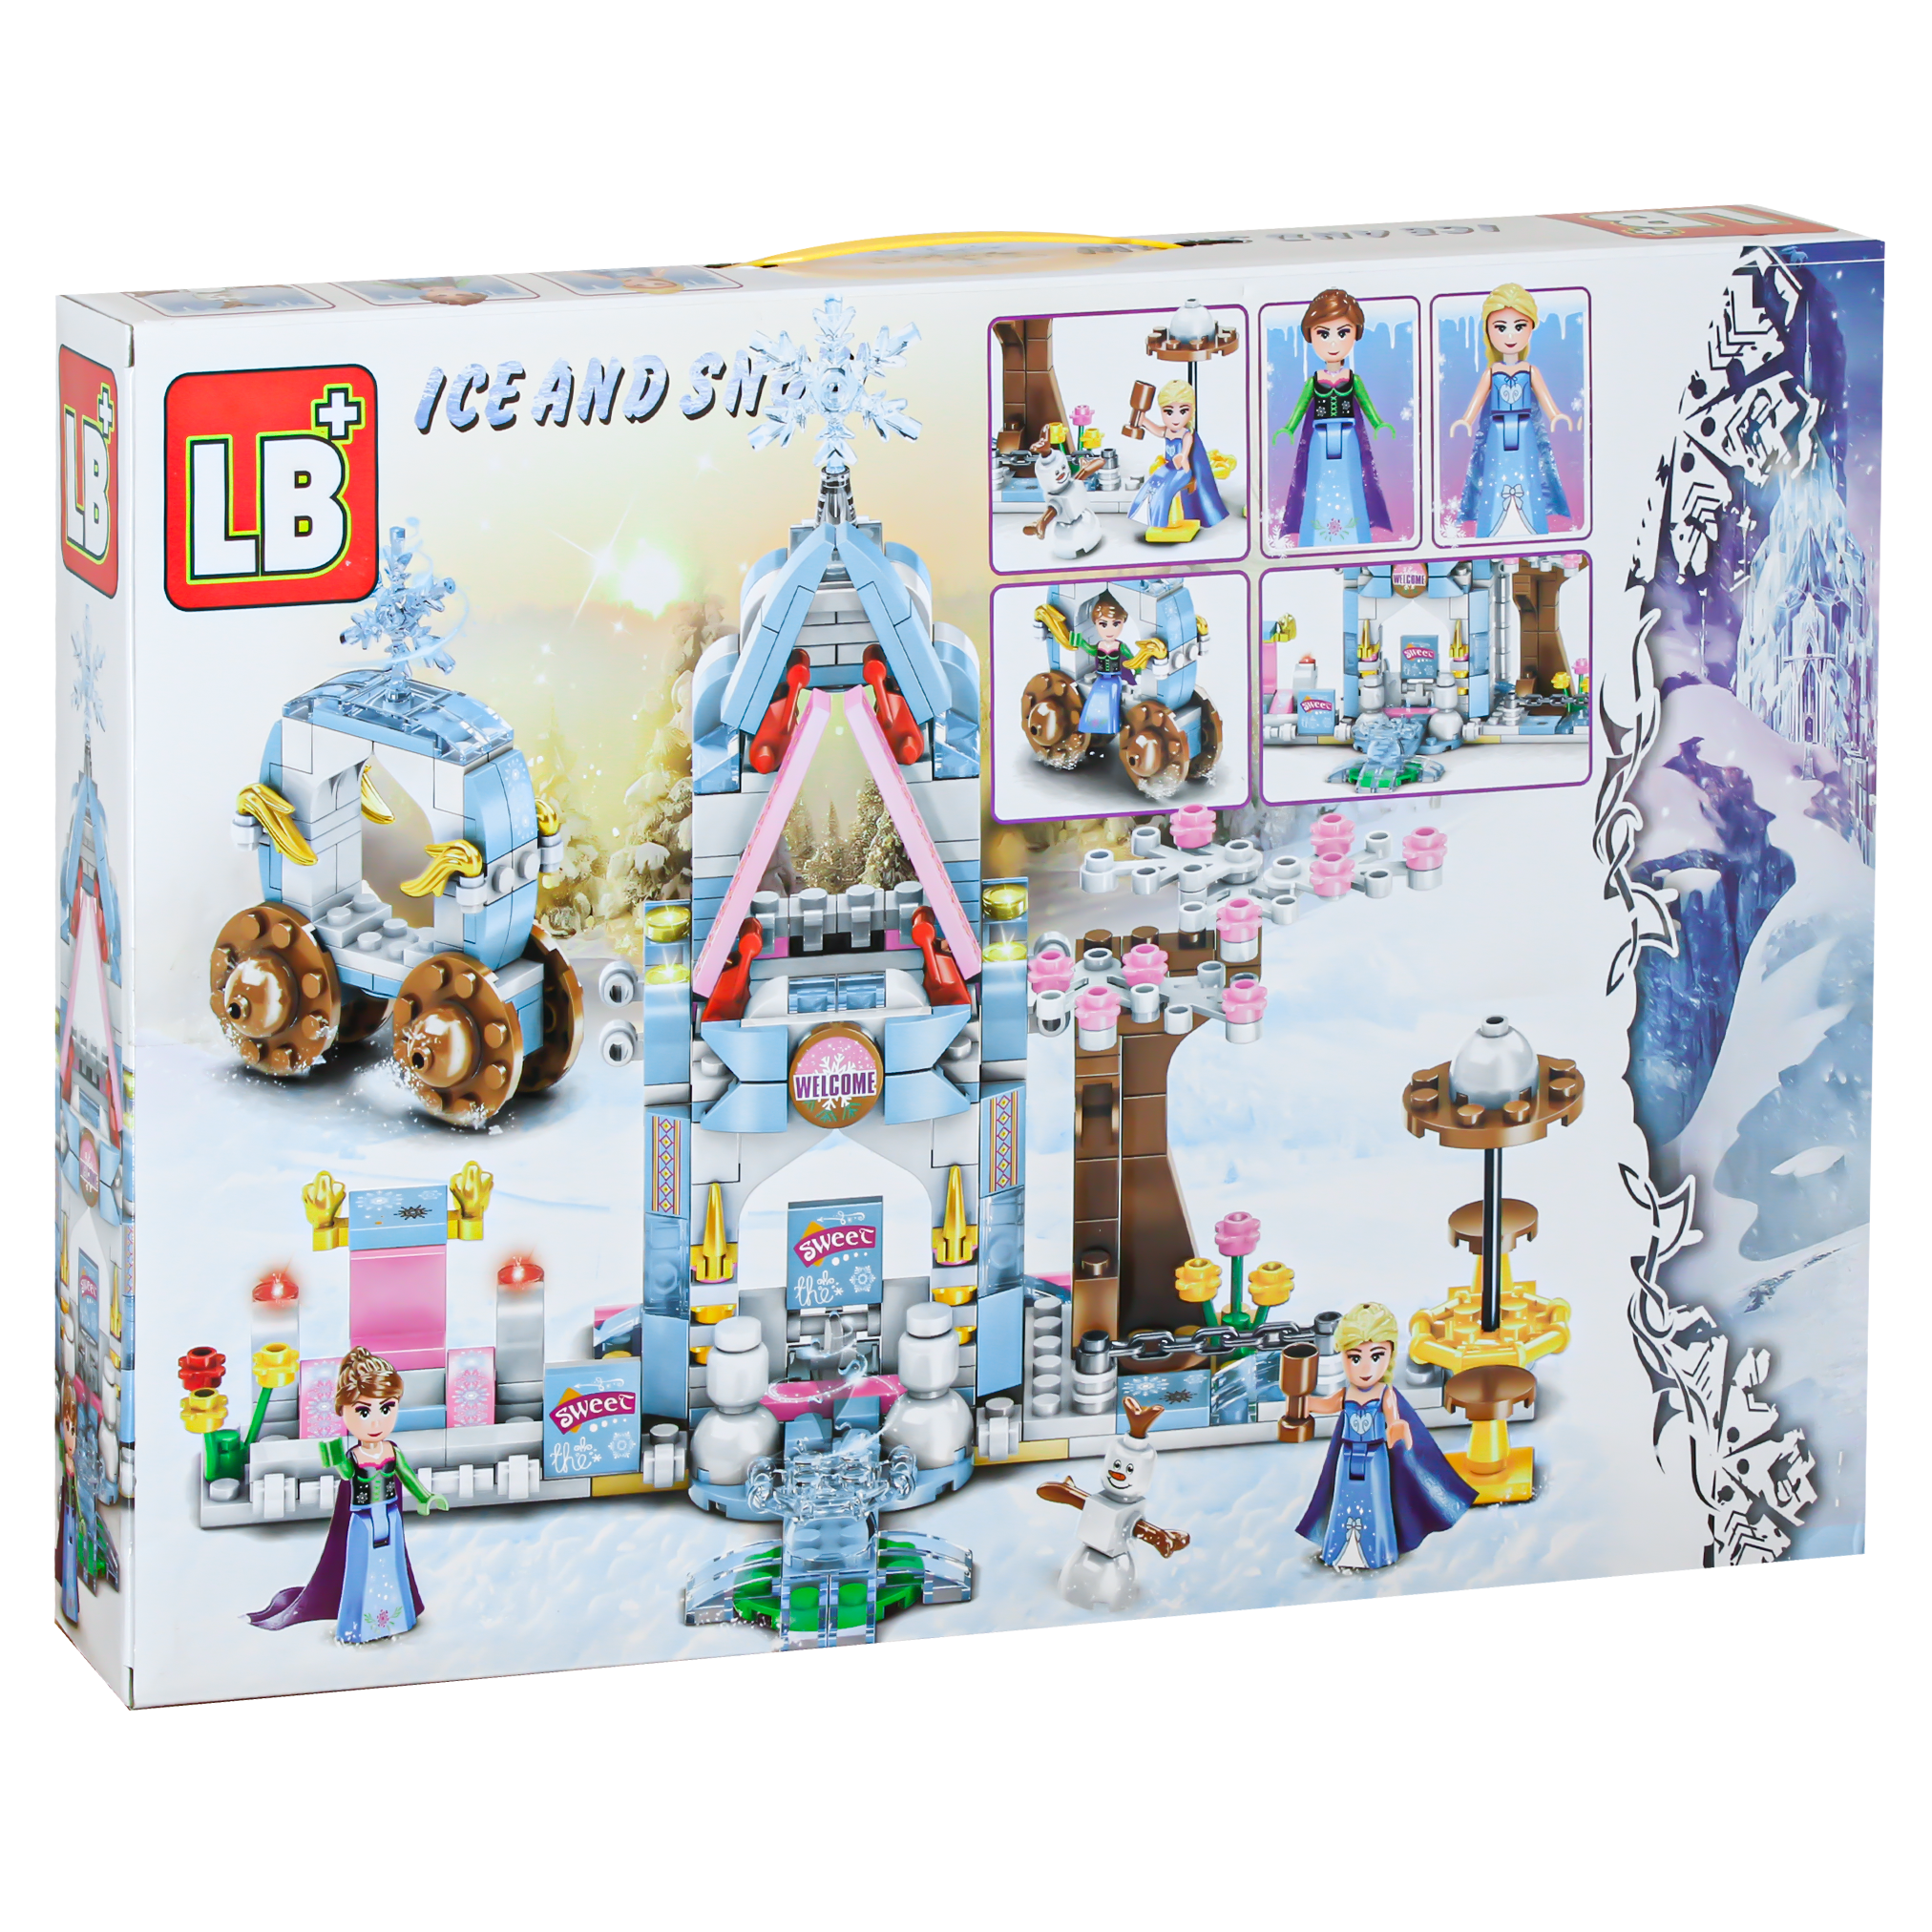 Building Blocks Ice & Snow Princess 445 PCS